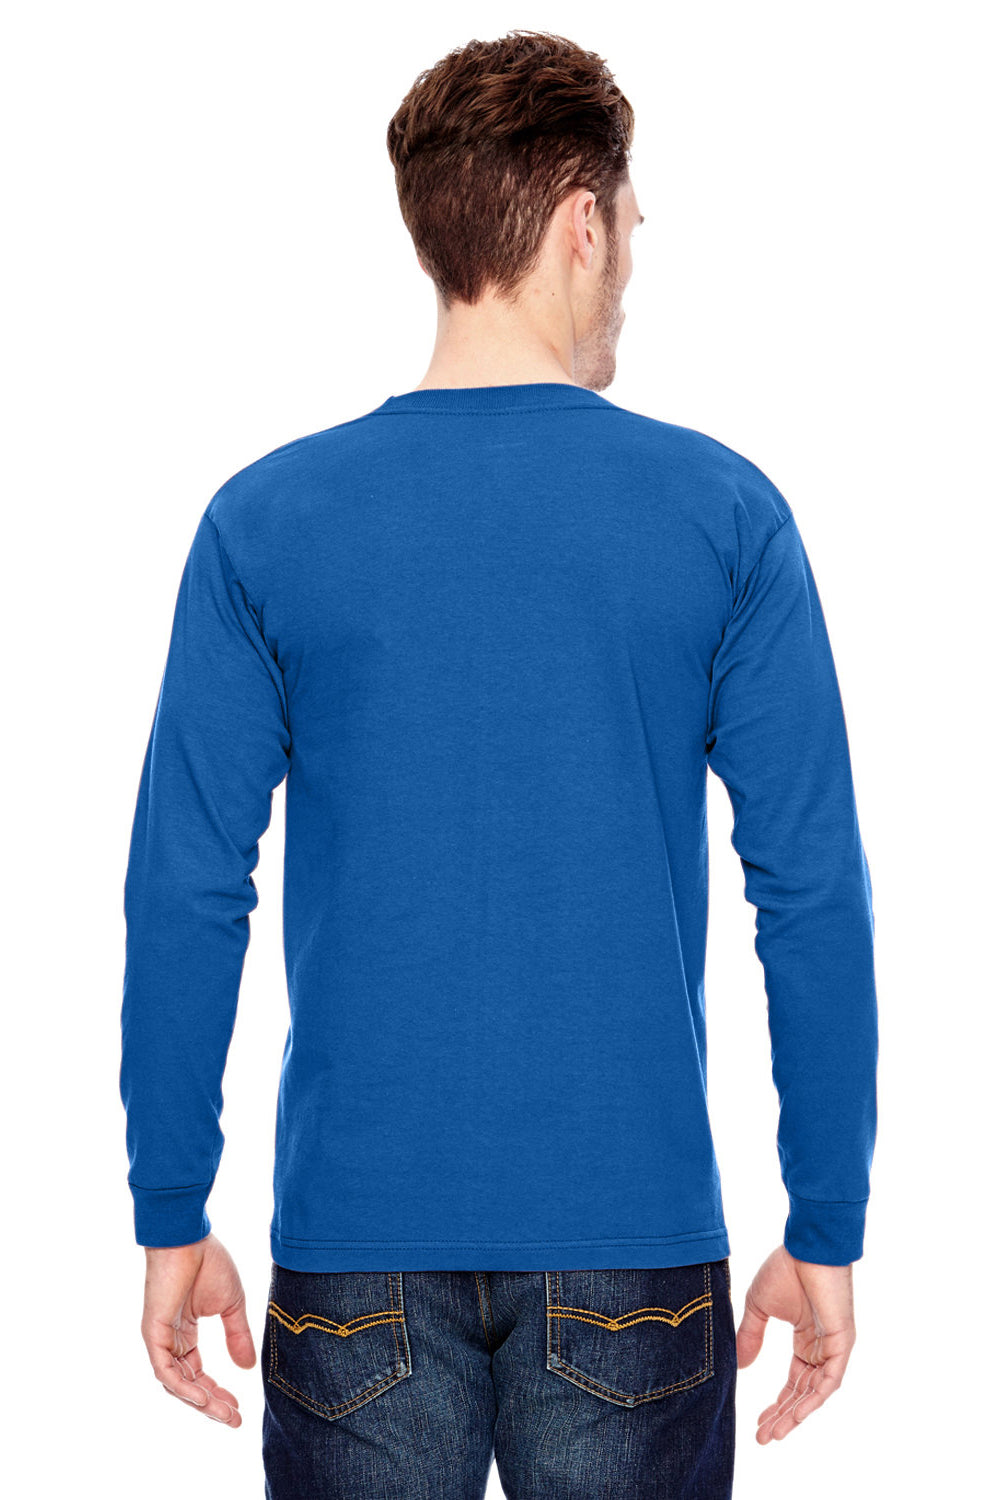 Bayside BA6100 Mens USA Made Long Sleeve Crewneck T-Shirt Royal Blue Model Back